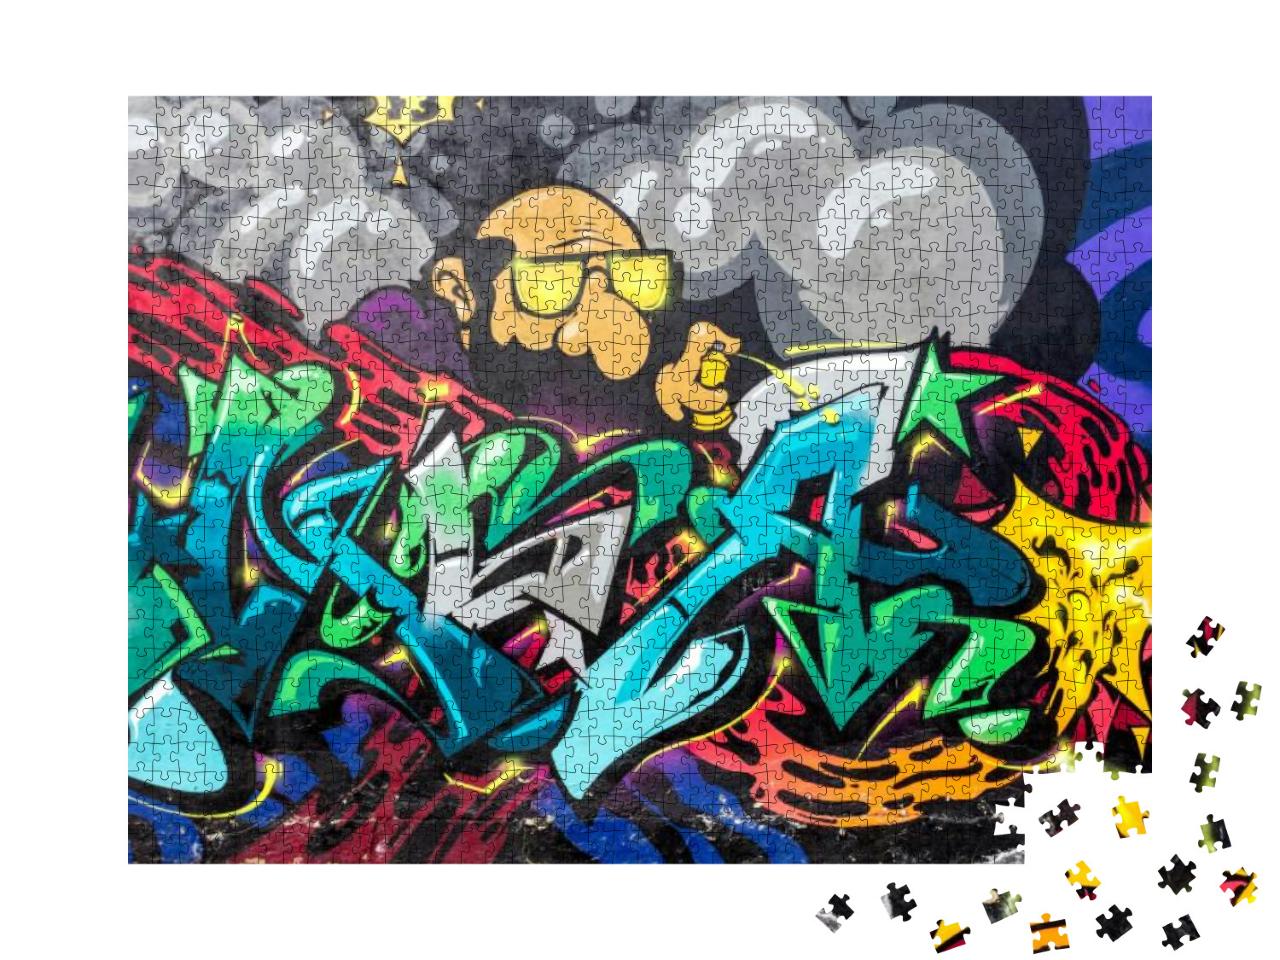 Puzzle 1000 Teile „Graffiti Sprayer“